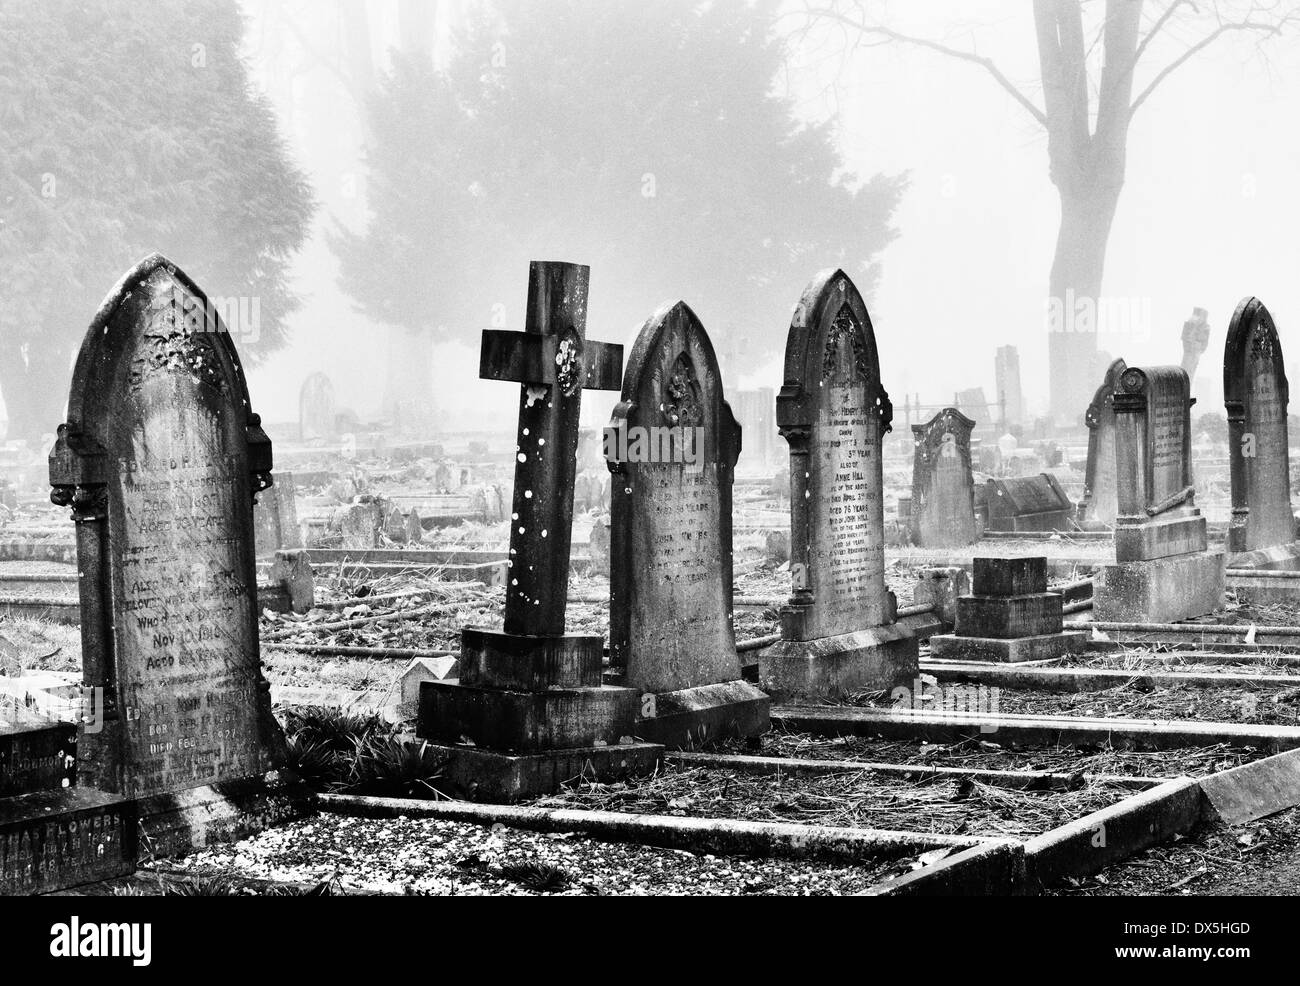 Gravestones in the fog at Banbury Cemetery, Oxfordshire, England. Monochrome Stock Photo